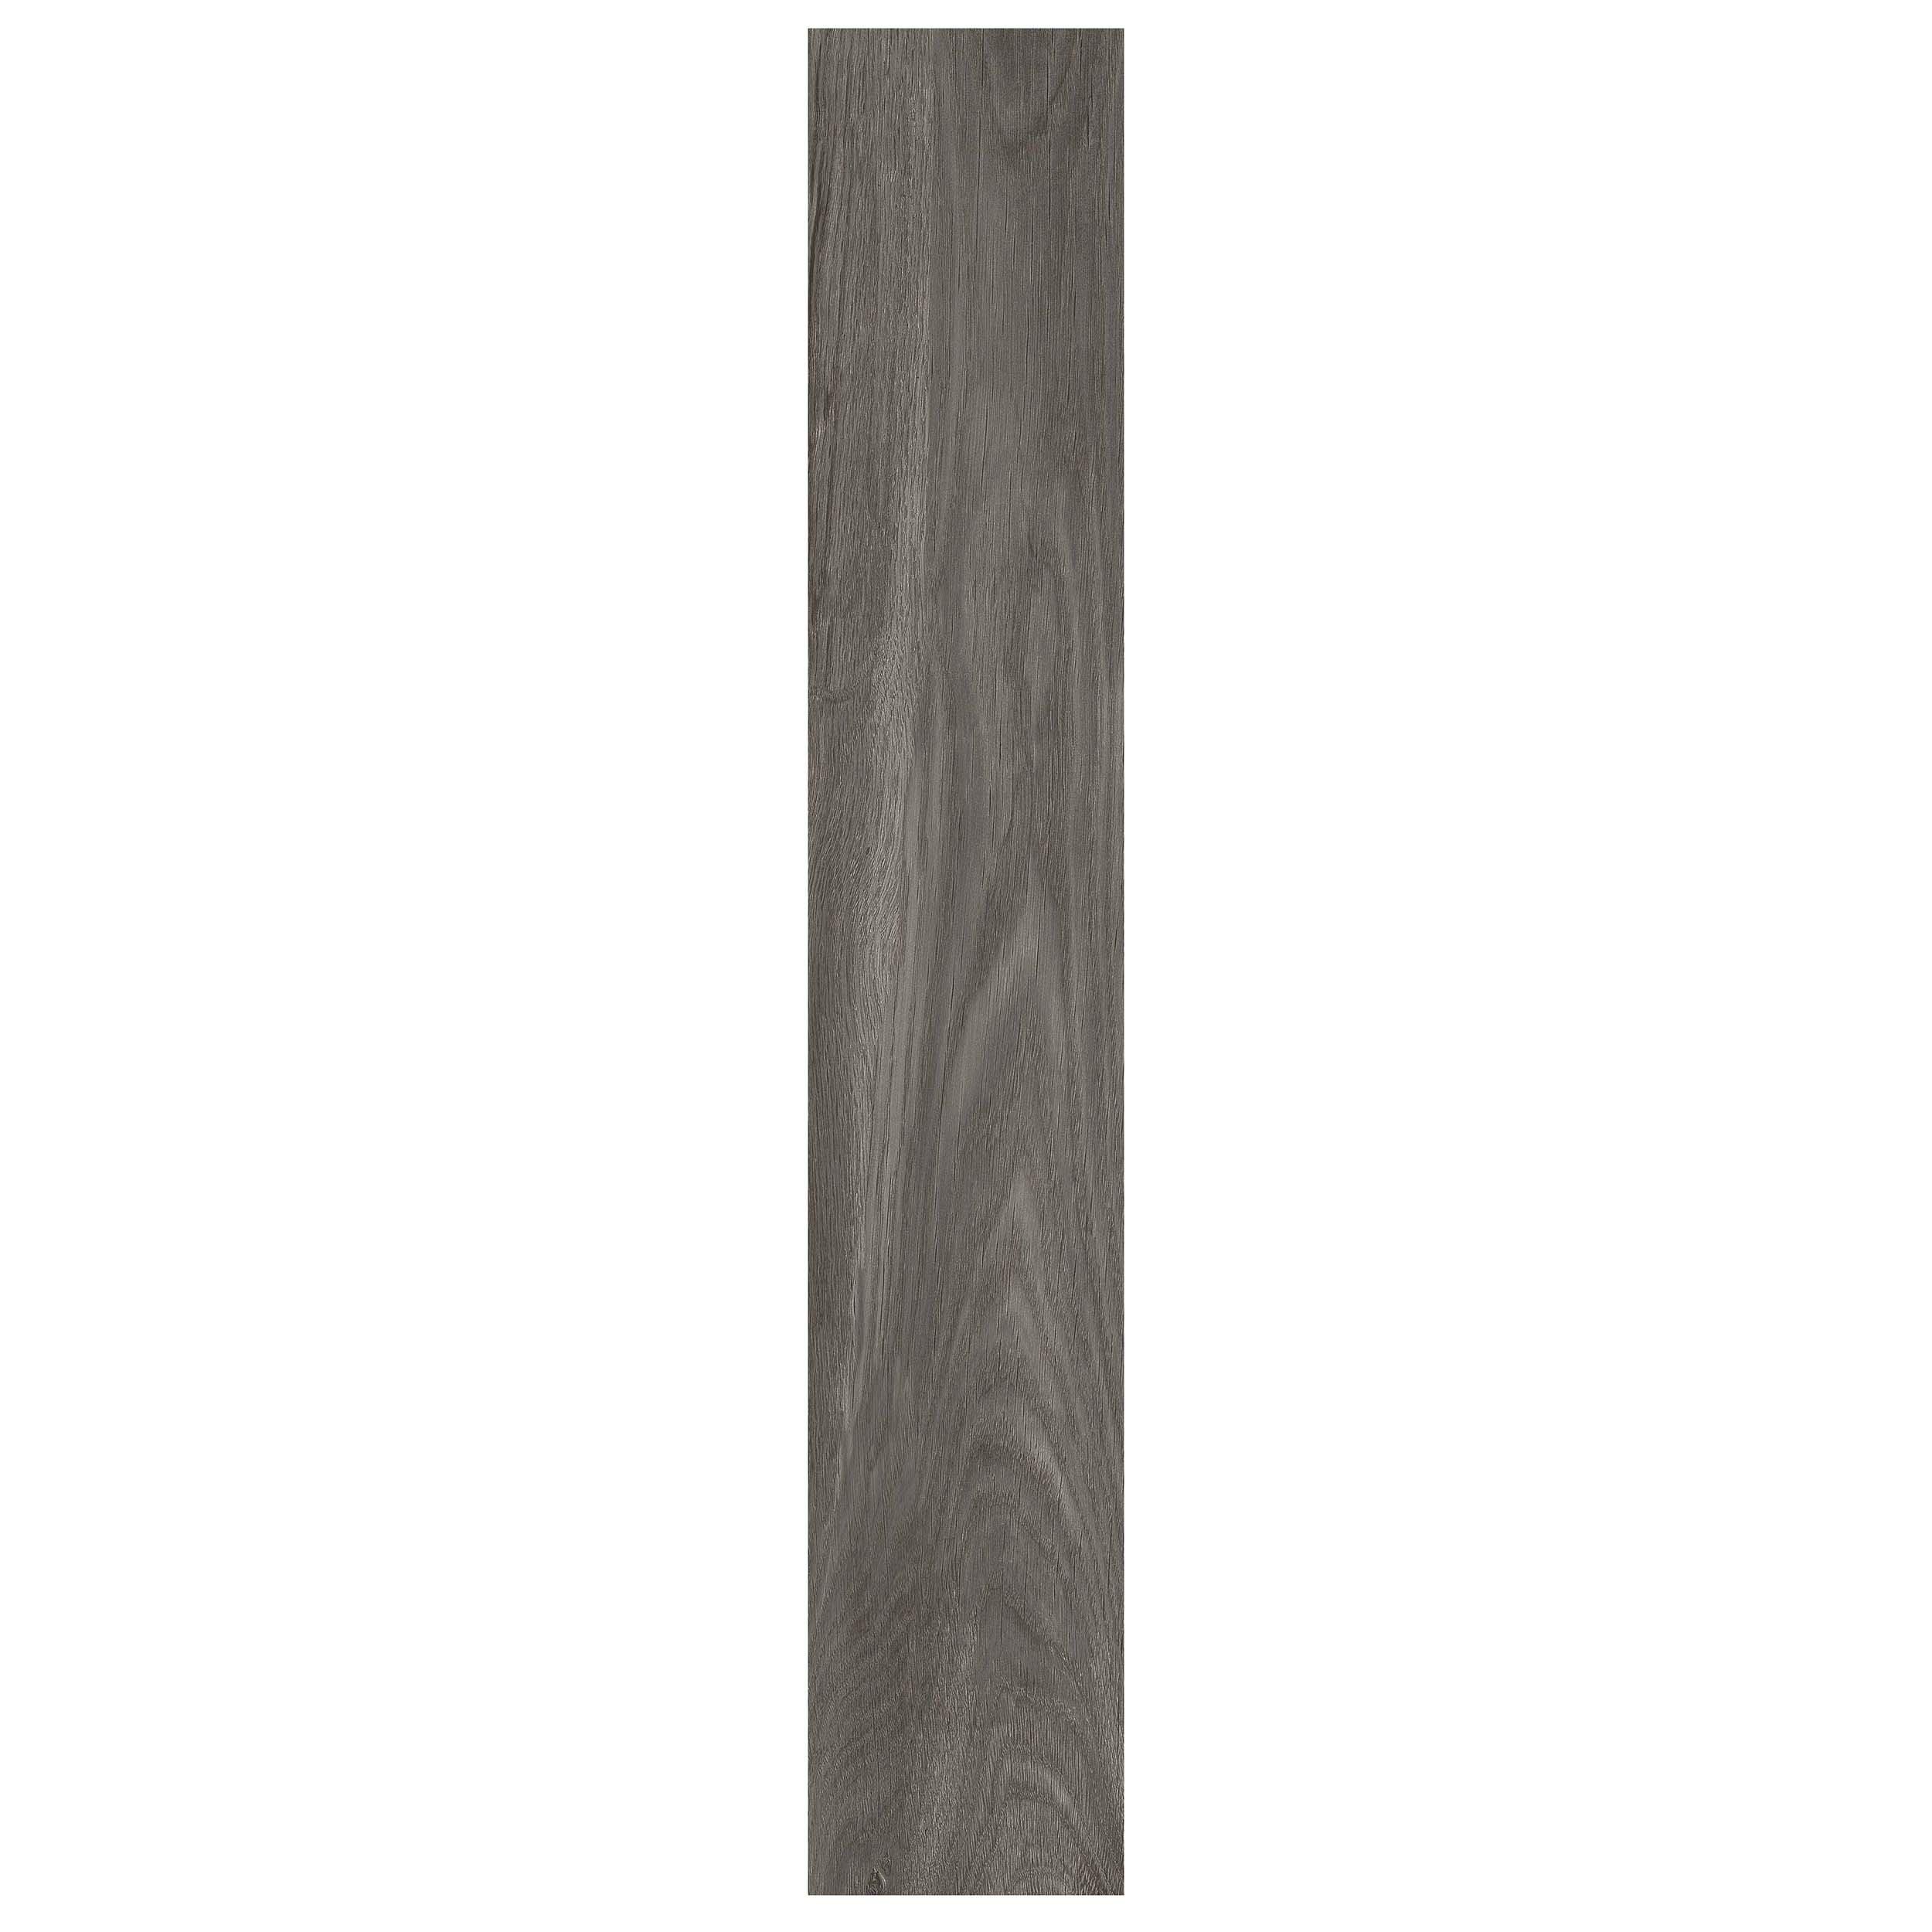 Elmwood Grey Wood Plank Porcelain Tile